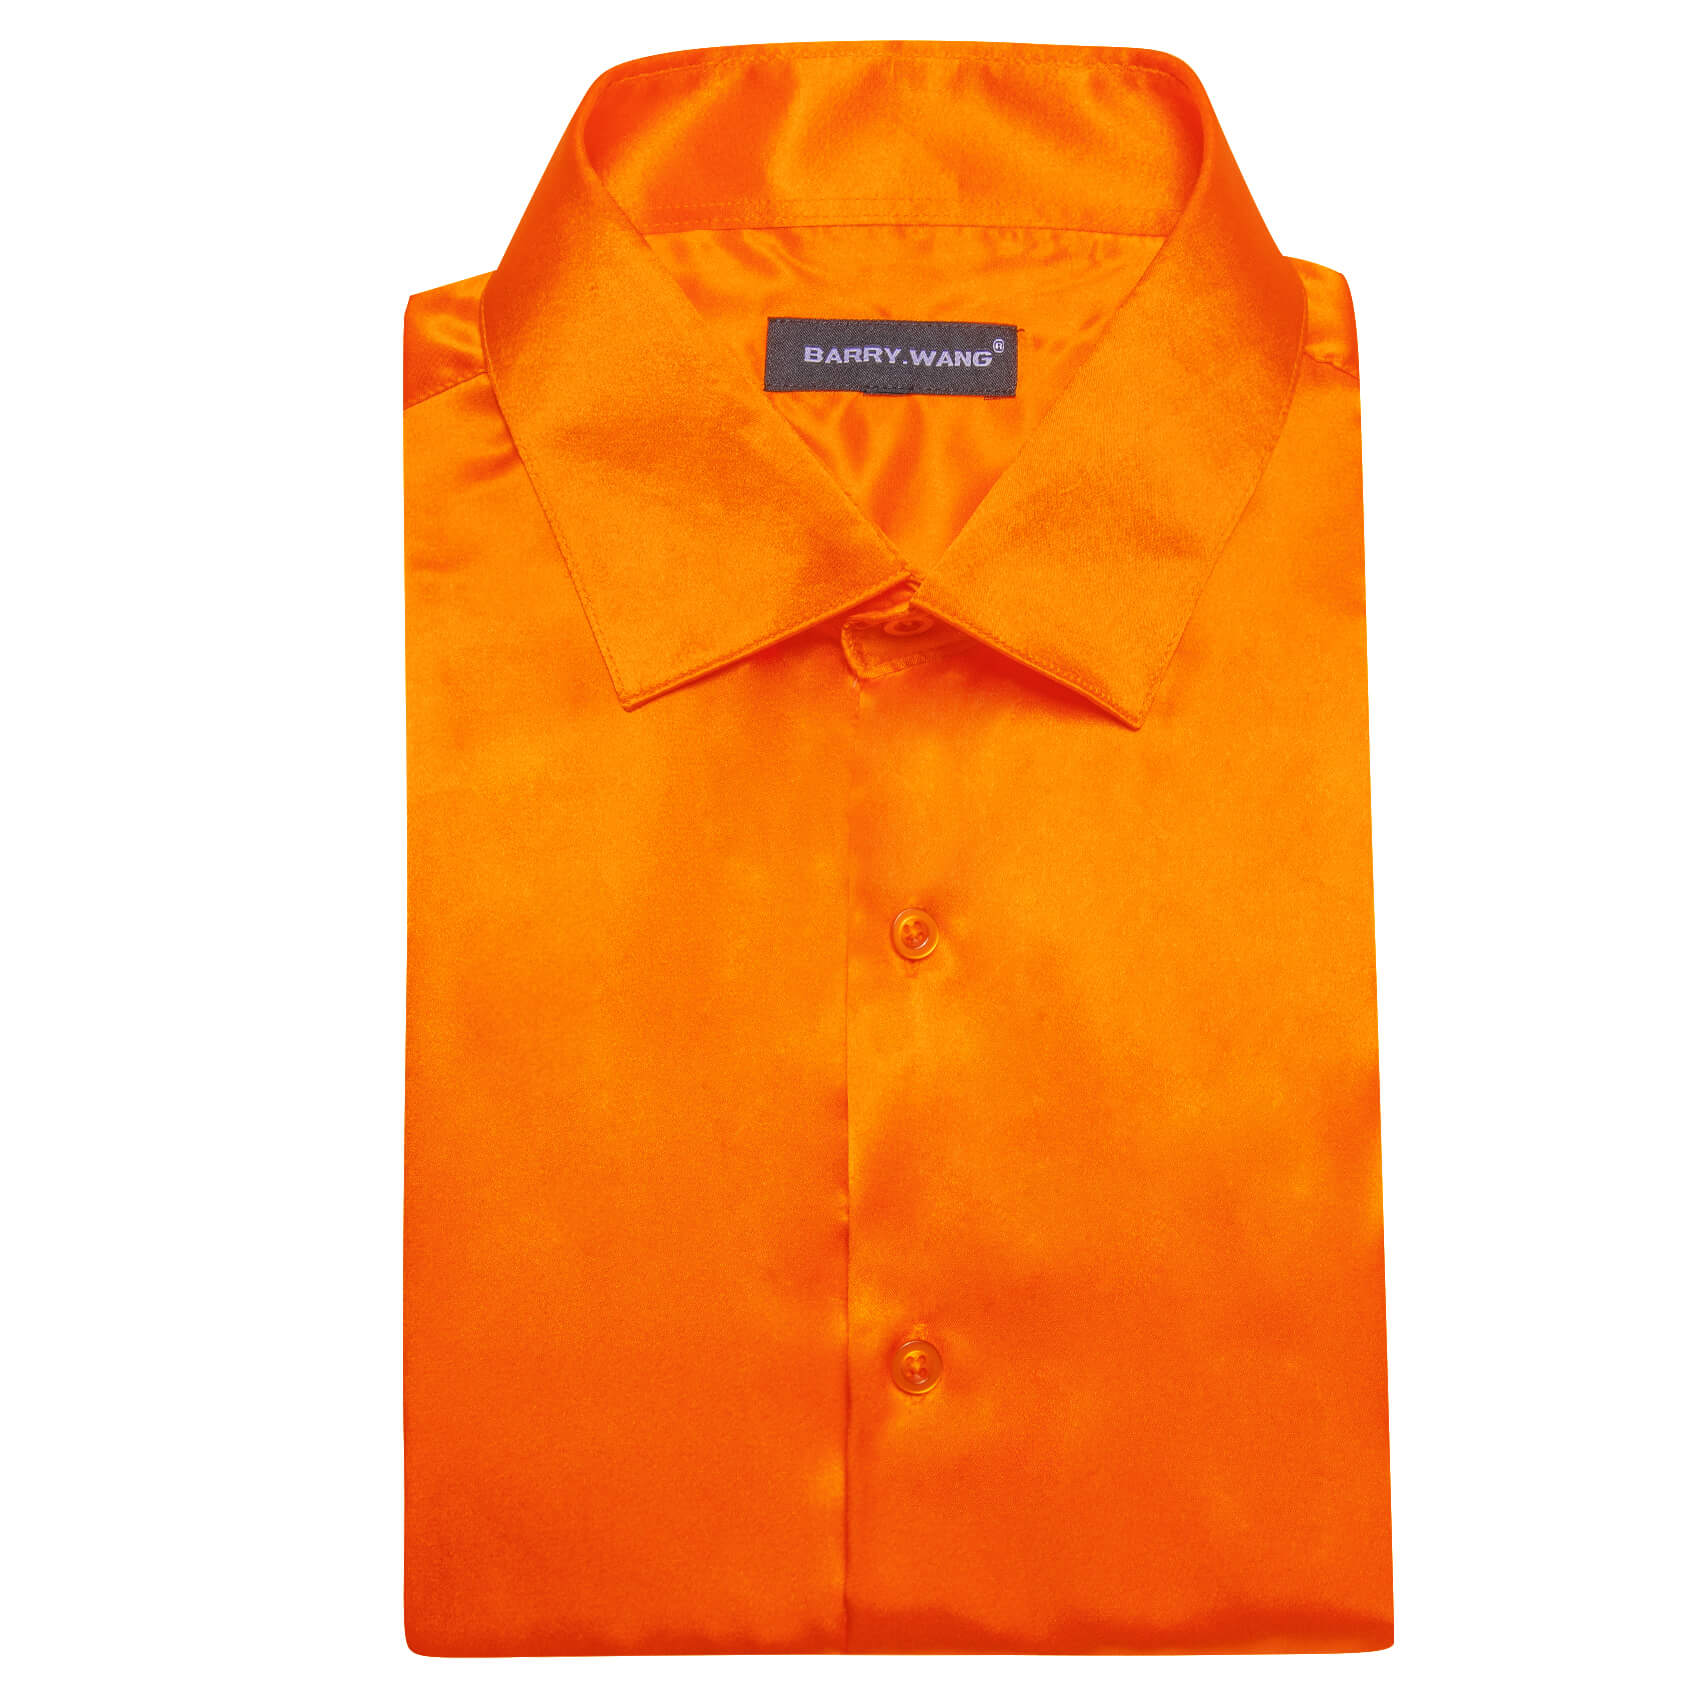 barry wang orange shirt men's button up shirt